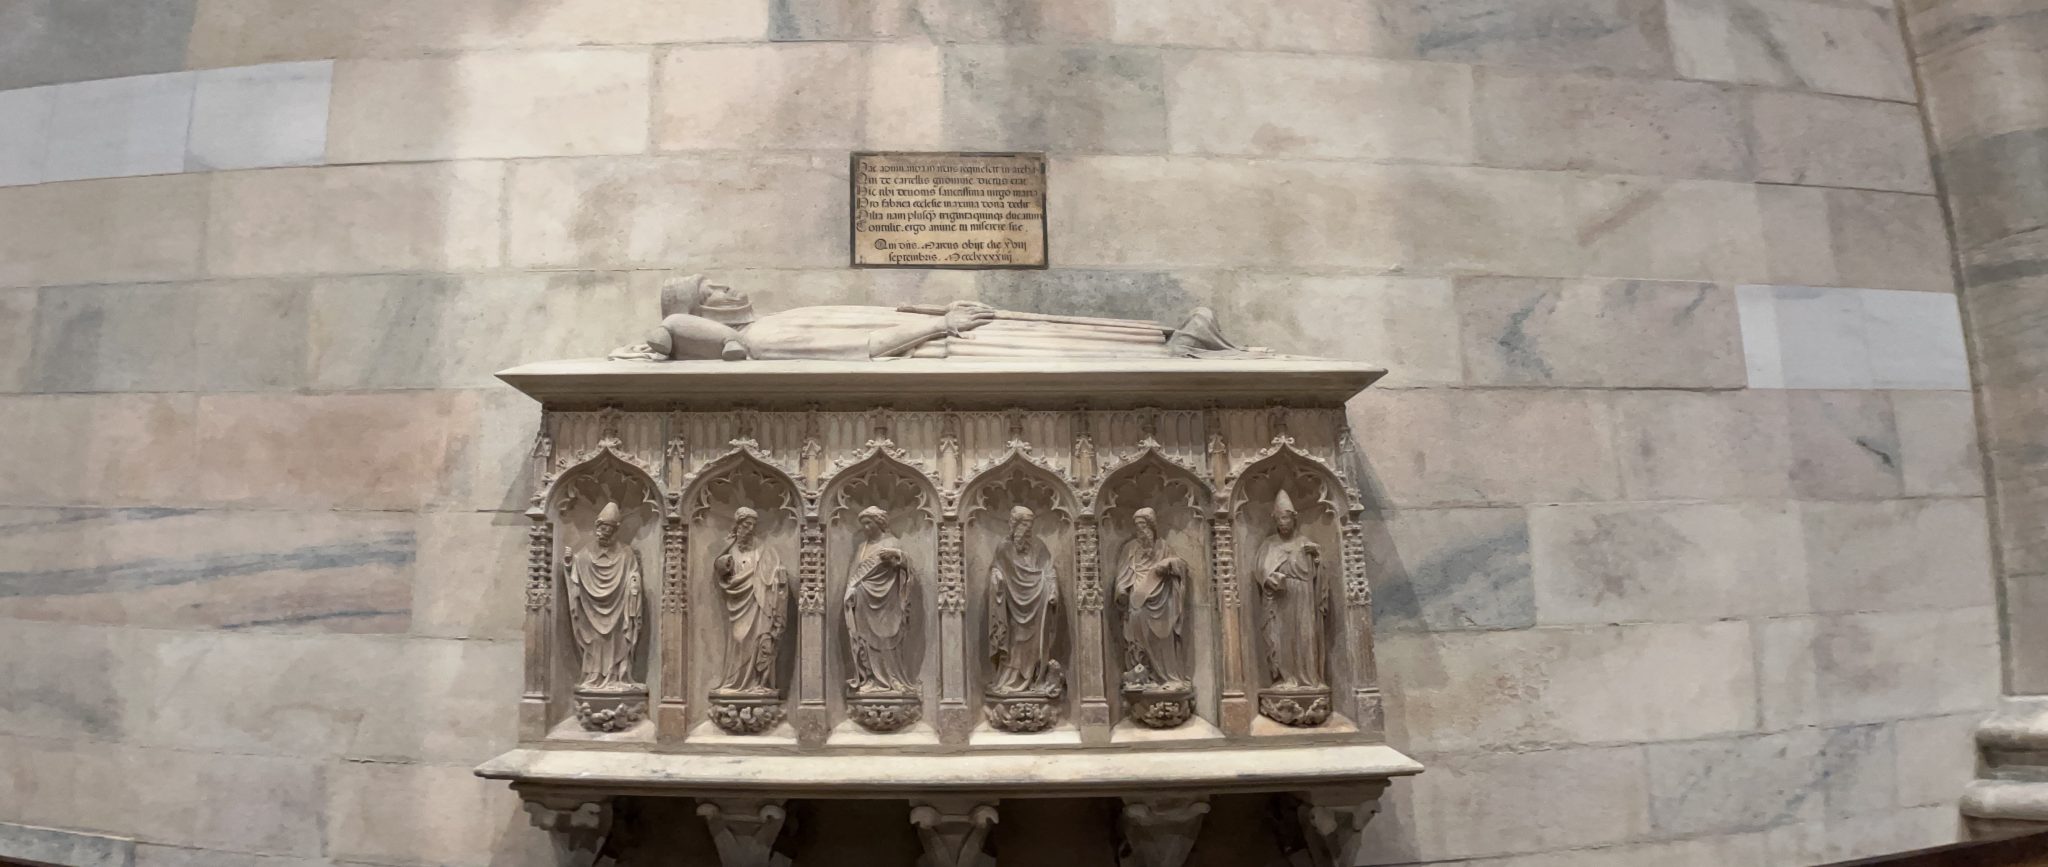 Grave inside a cathedral, duomo de milano, milan, italy, cathedral